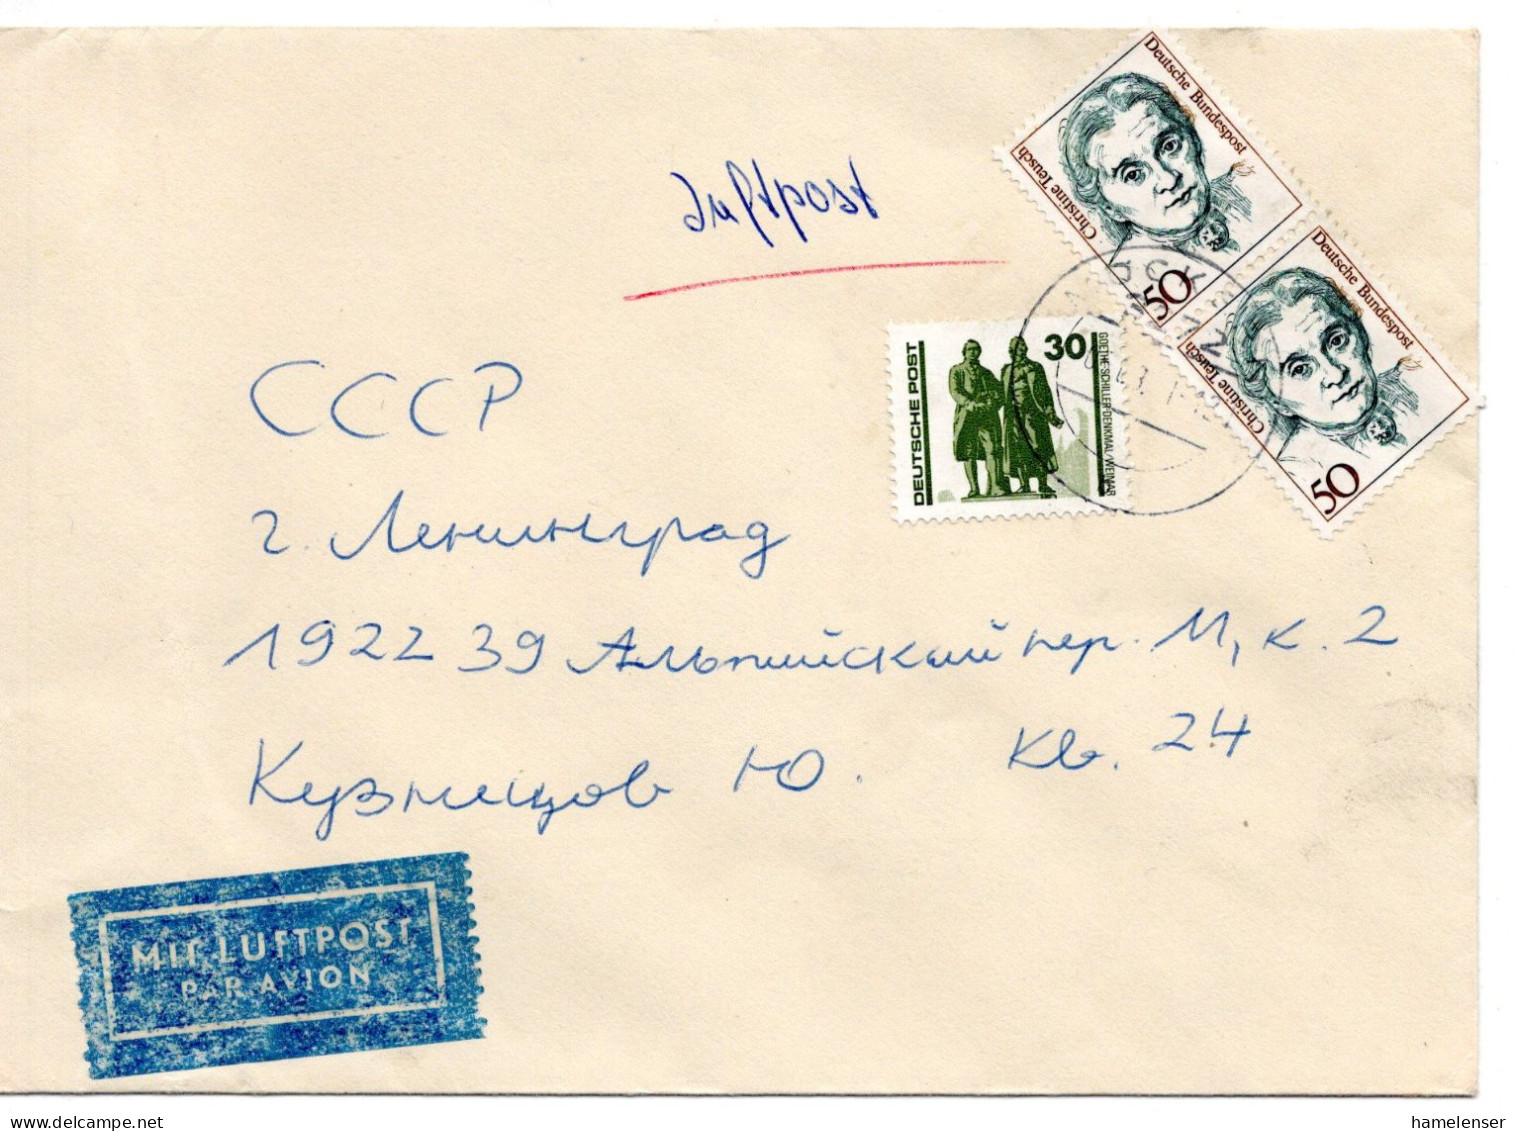 66866 - DDR - 1991 - 30Pfg DM-Serie MiF A LpBf MOECKERN -> LENINGRAD (UdSSR) - Lettres & Documents